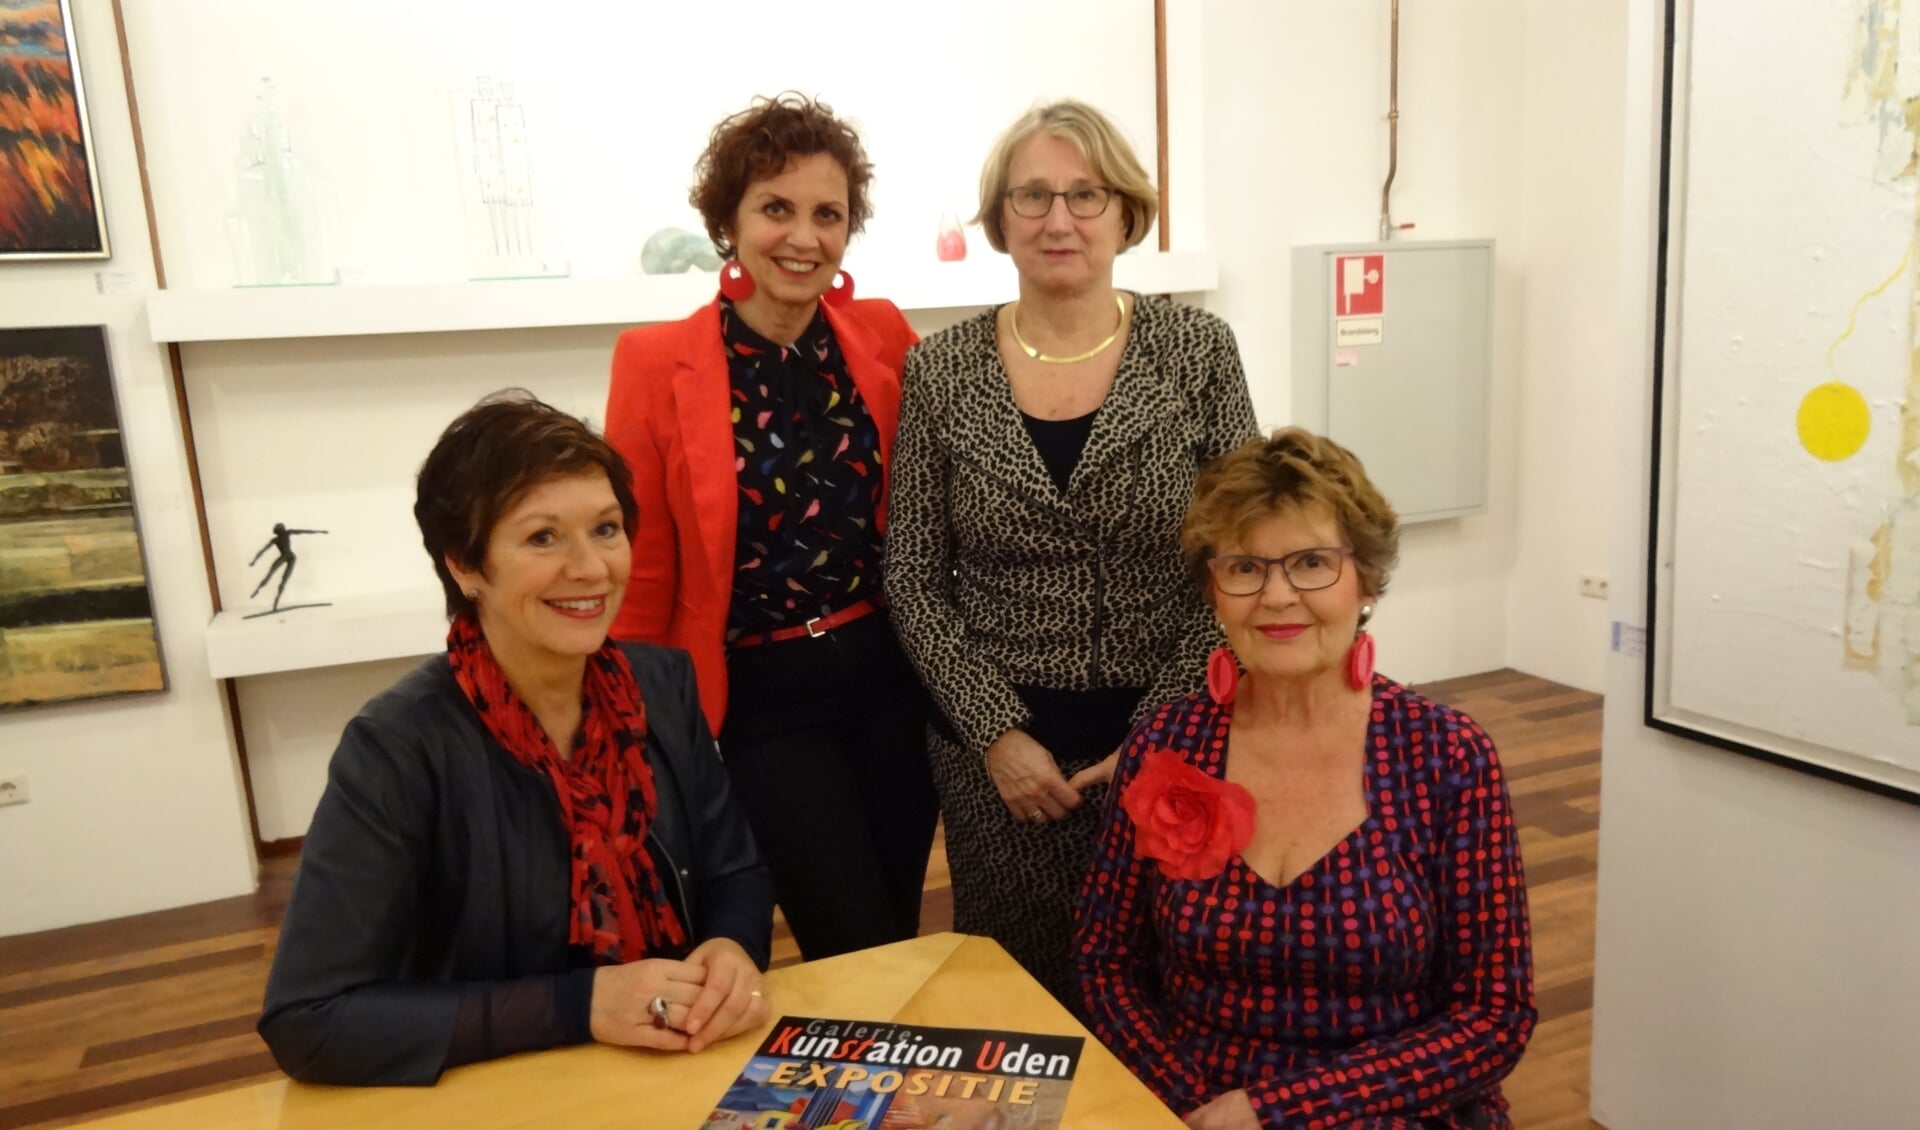 De deelneemsters aan de expositie vlnr: Hera, Yvonne, Anne-Mieke en Leny. (foto: Ankh van Burk)